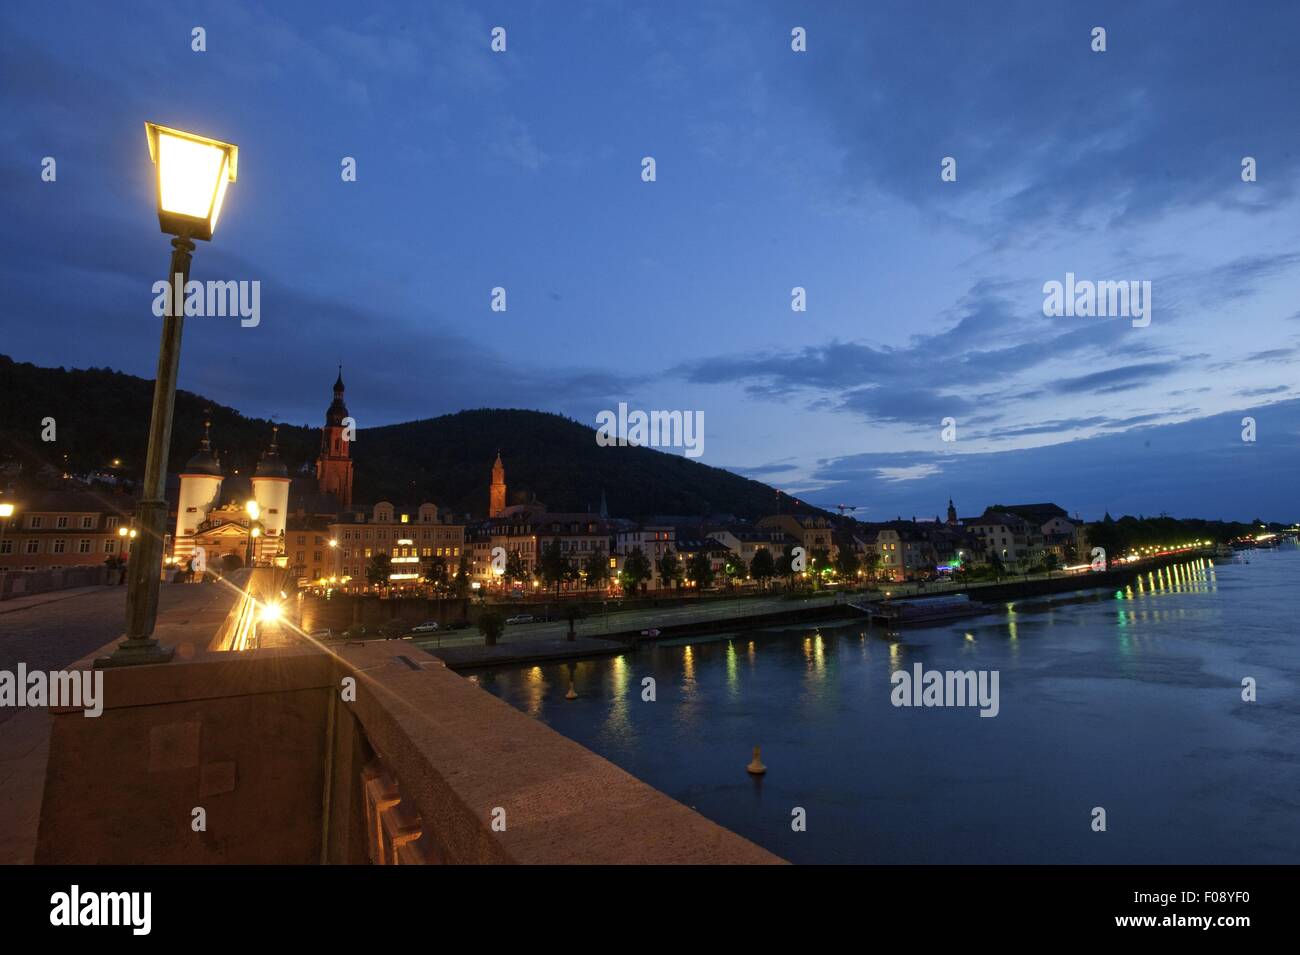 Illuminated Karl Theodor Bridge overlooking river Neckar at night in Heidelberg, Germany Stock Photo